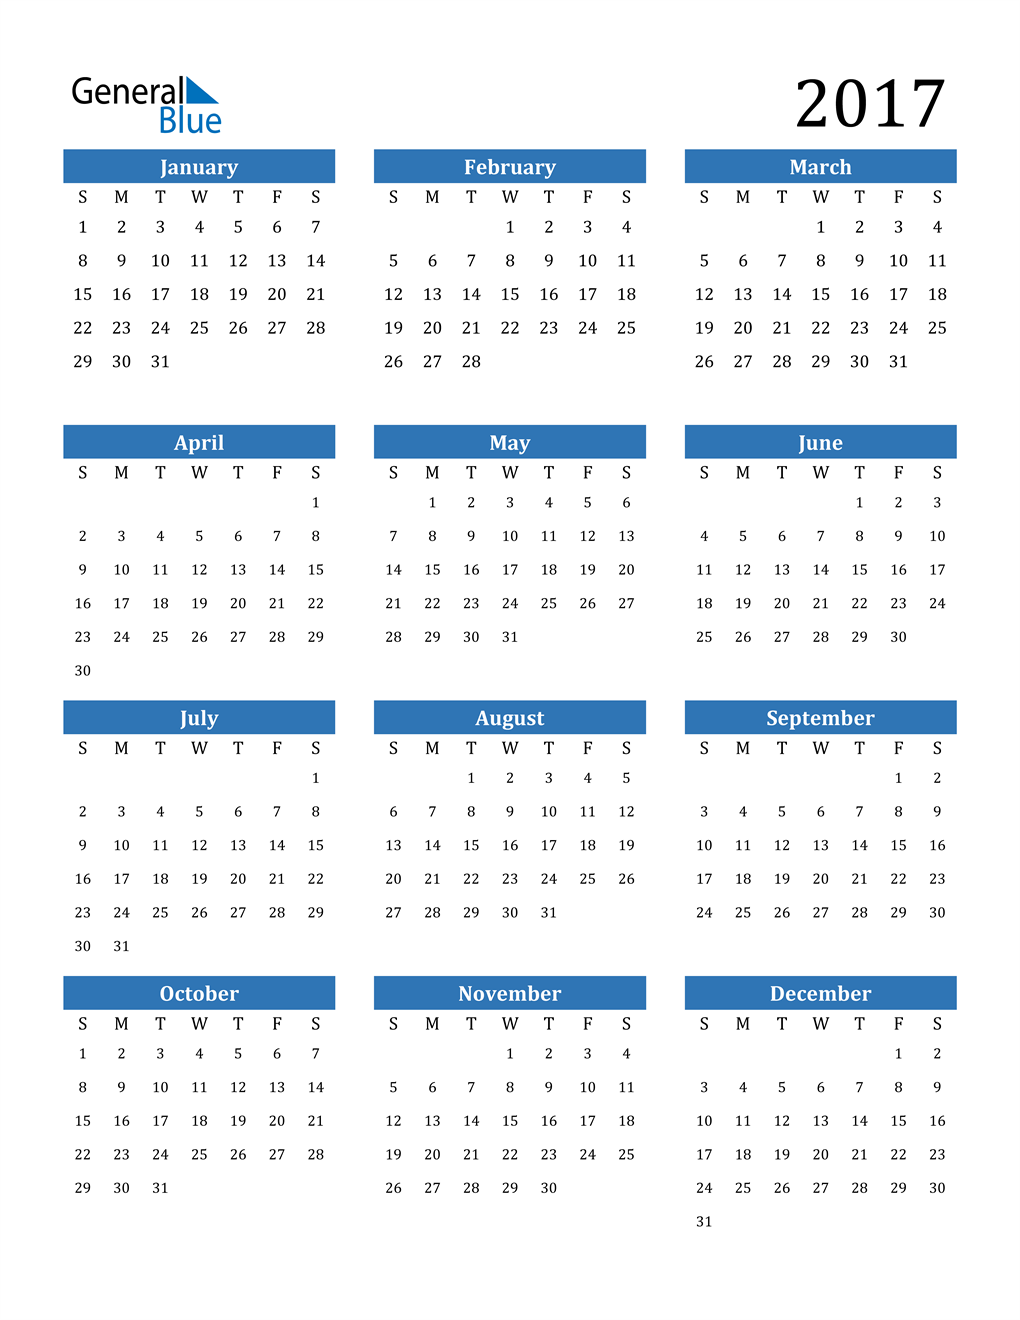 2017 Calendar Template Vector by 123freevectors on DeviantArt